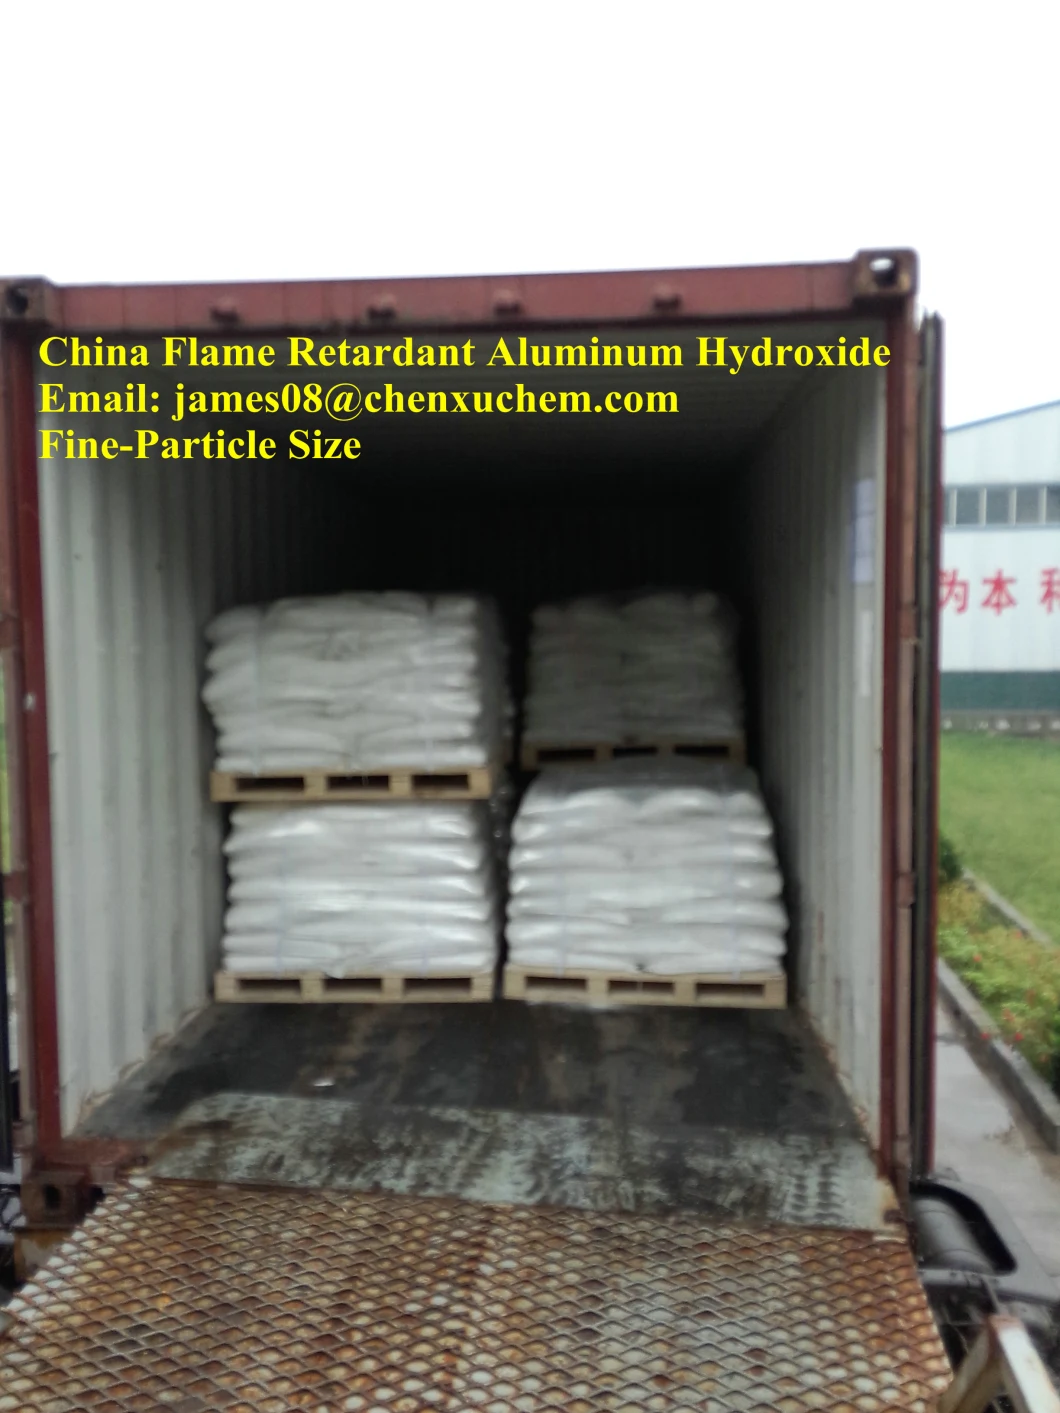 Aluminum Hydroxide (CAS Number: 21645-51-2)